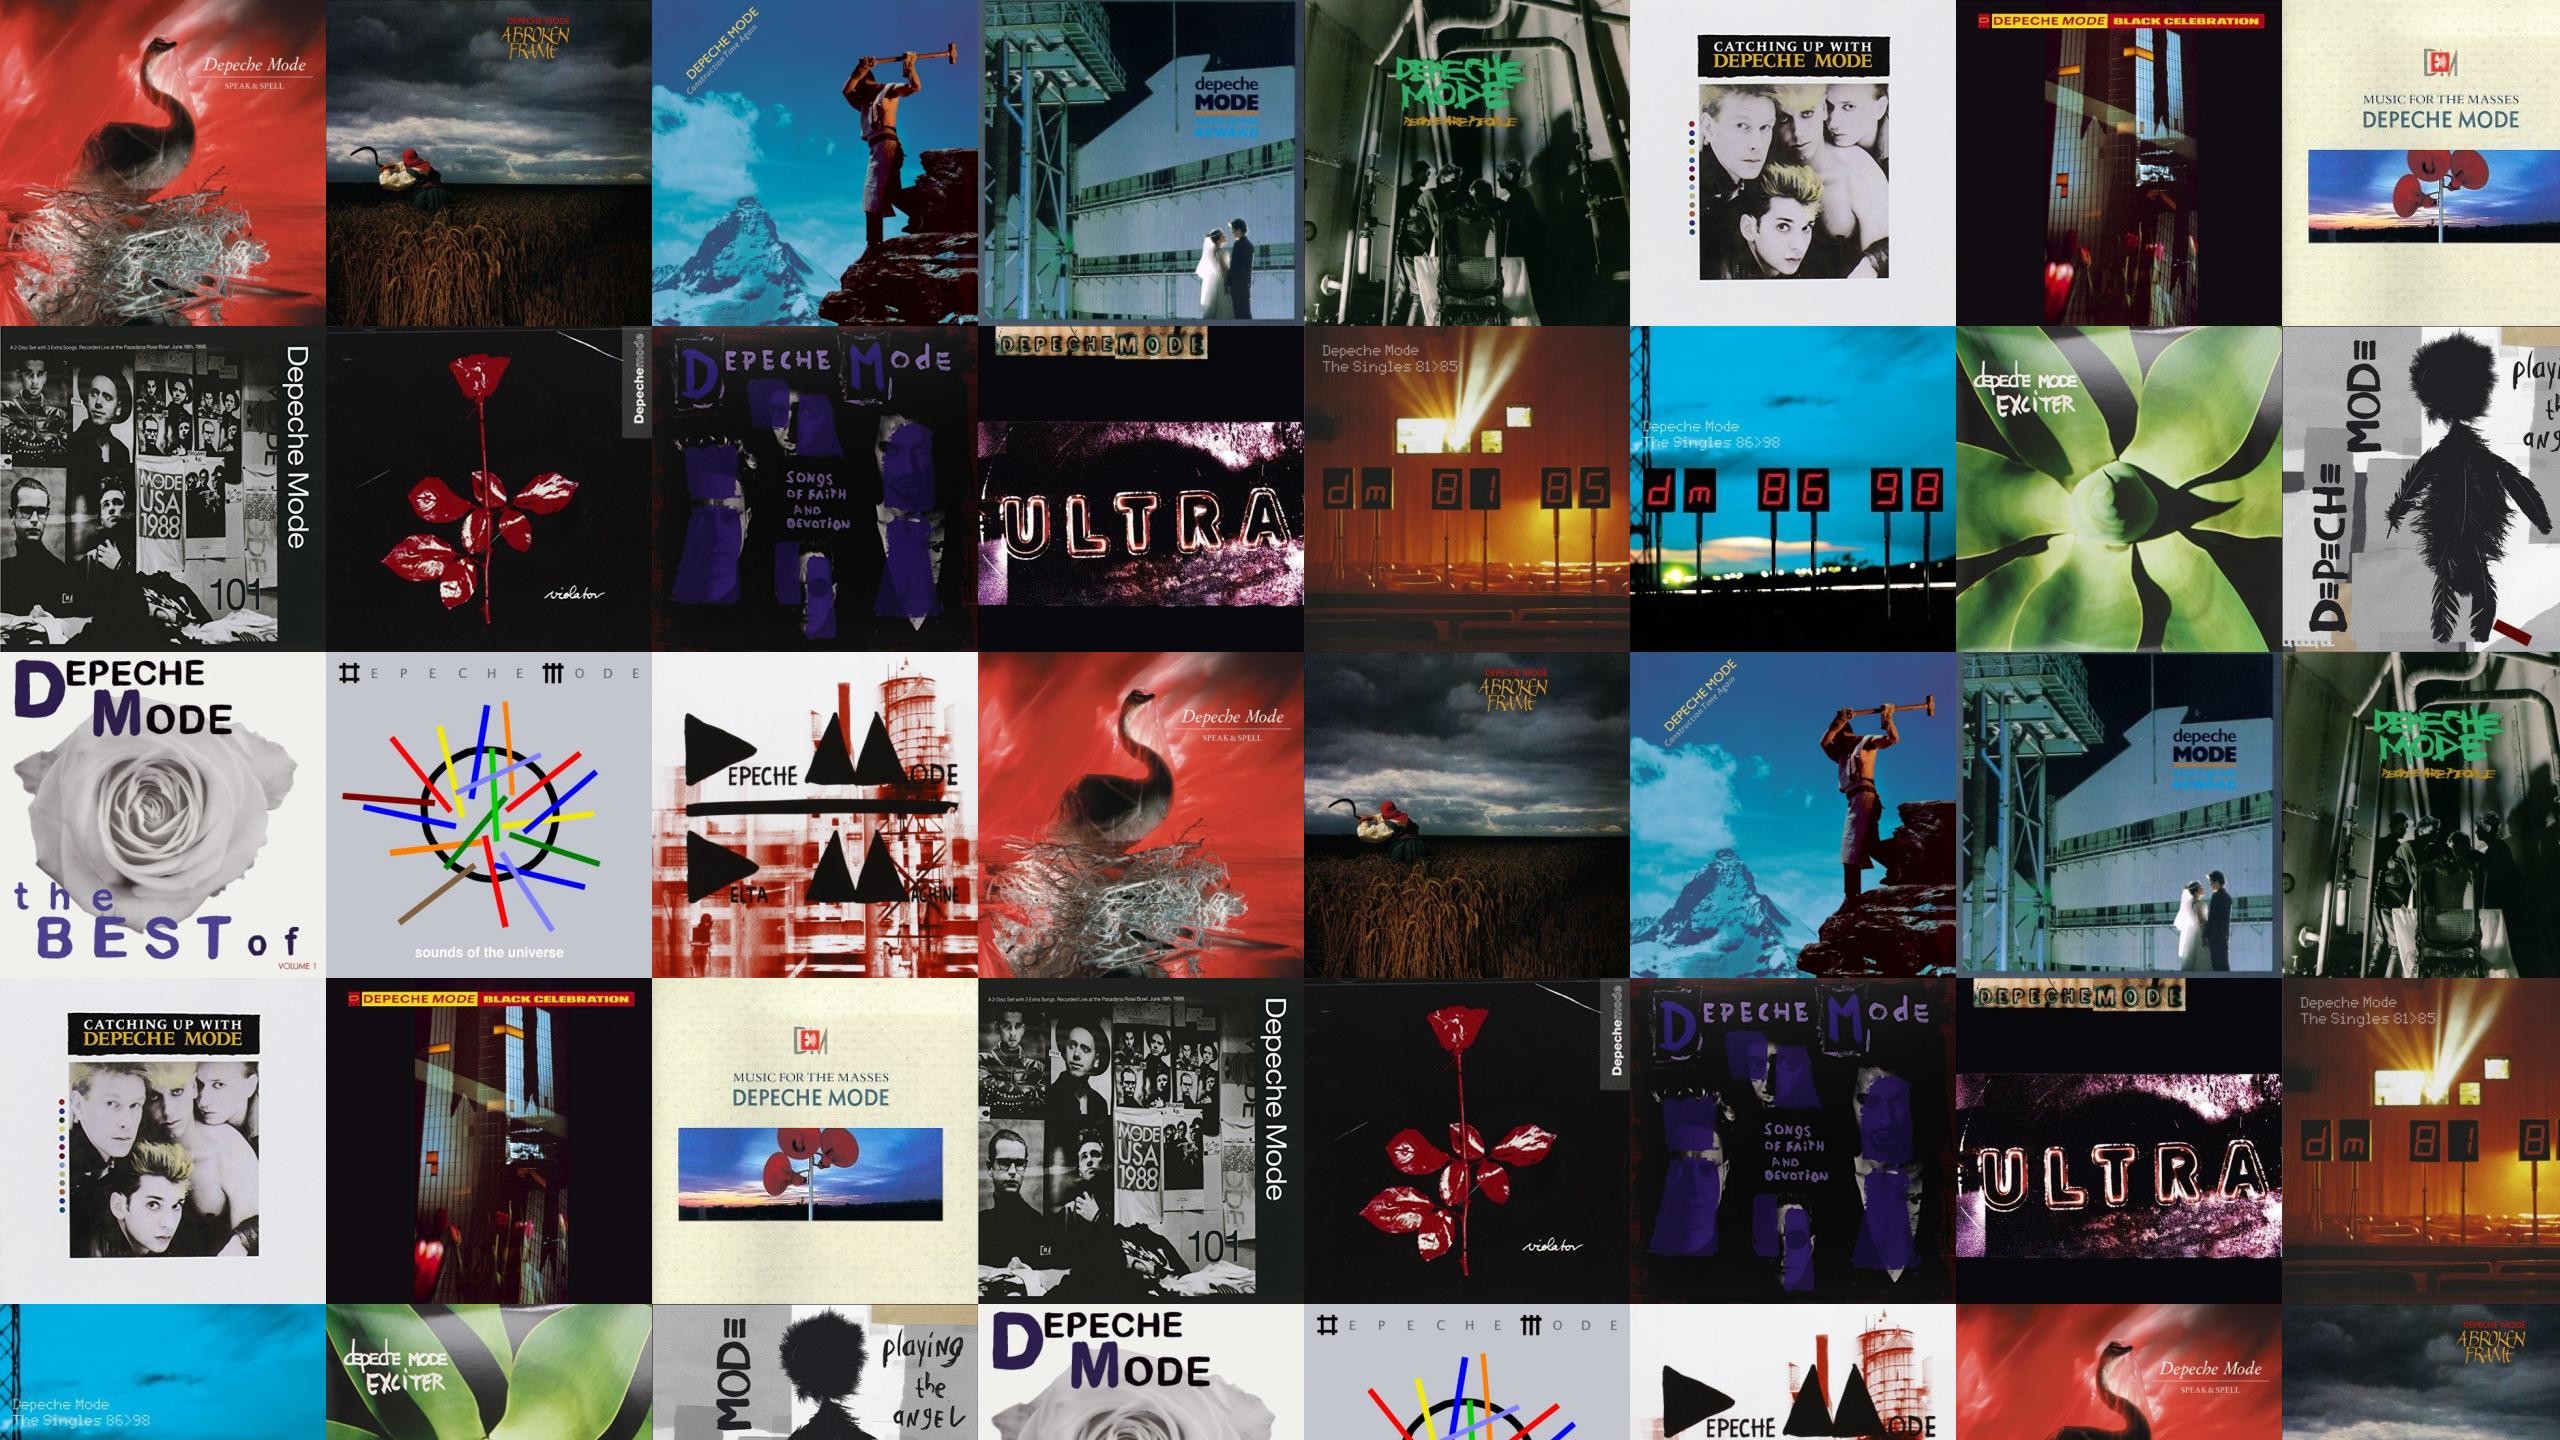 Depeche mode full discography torrent download